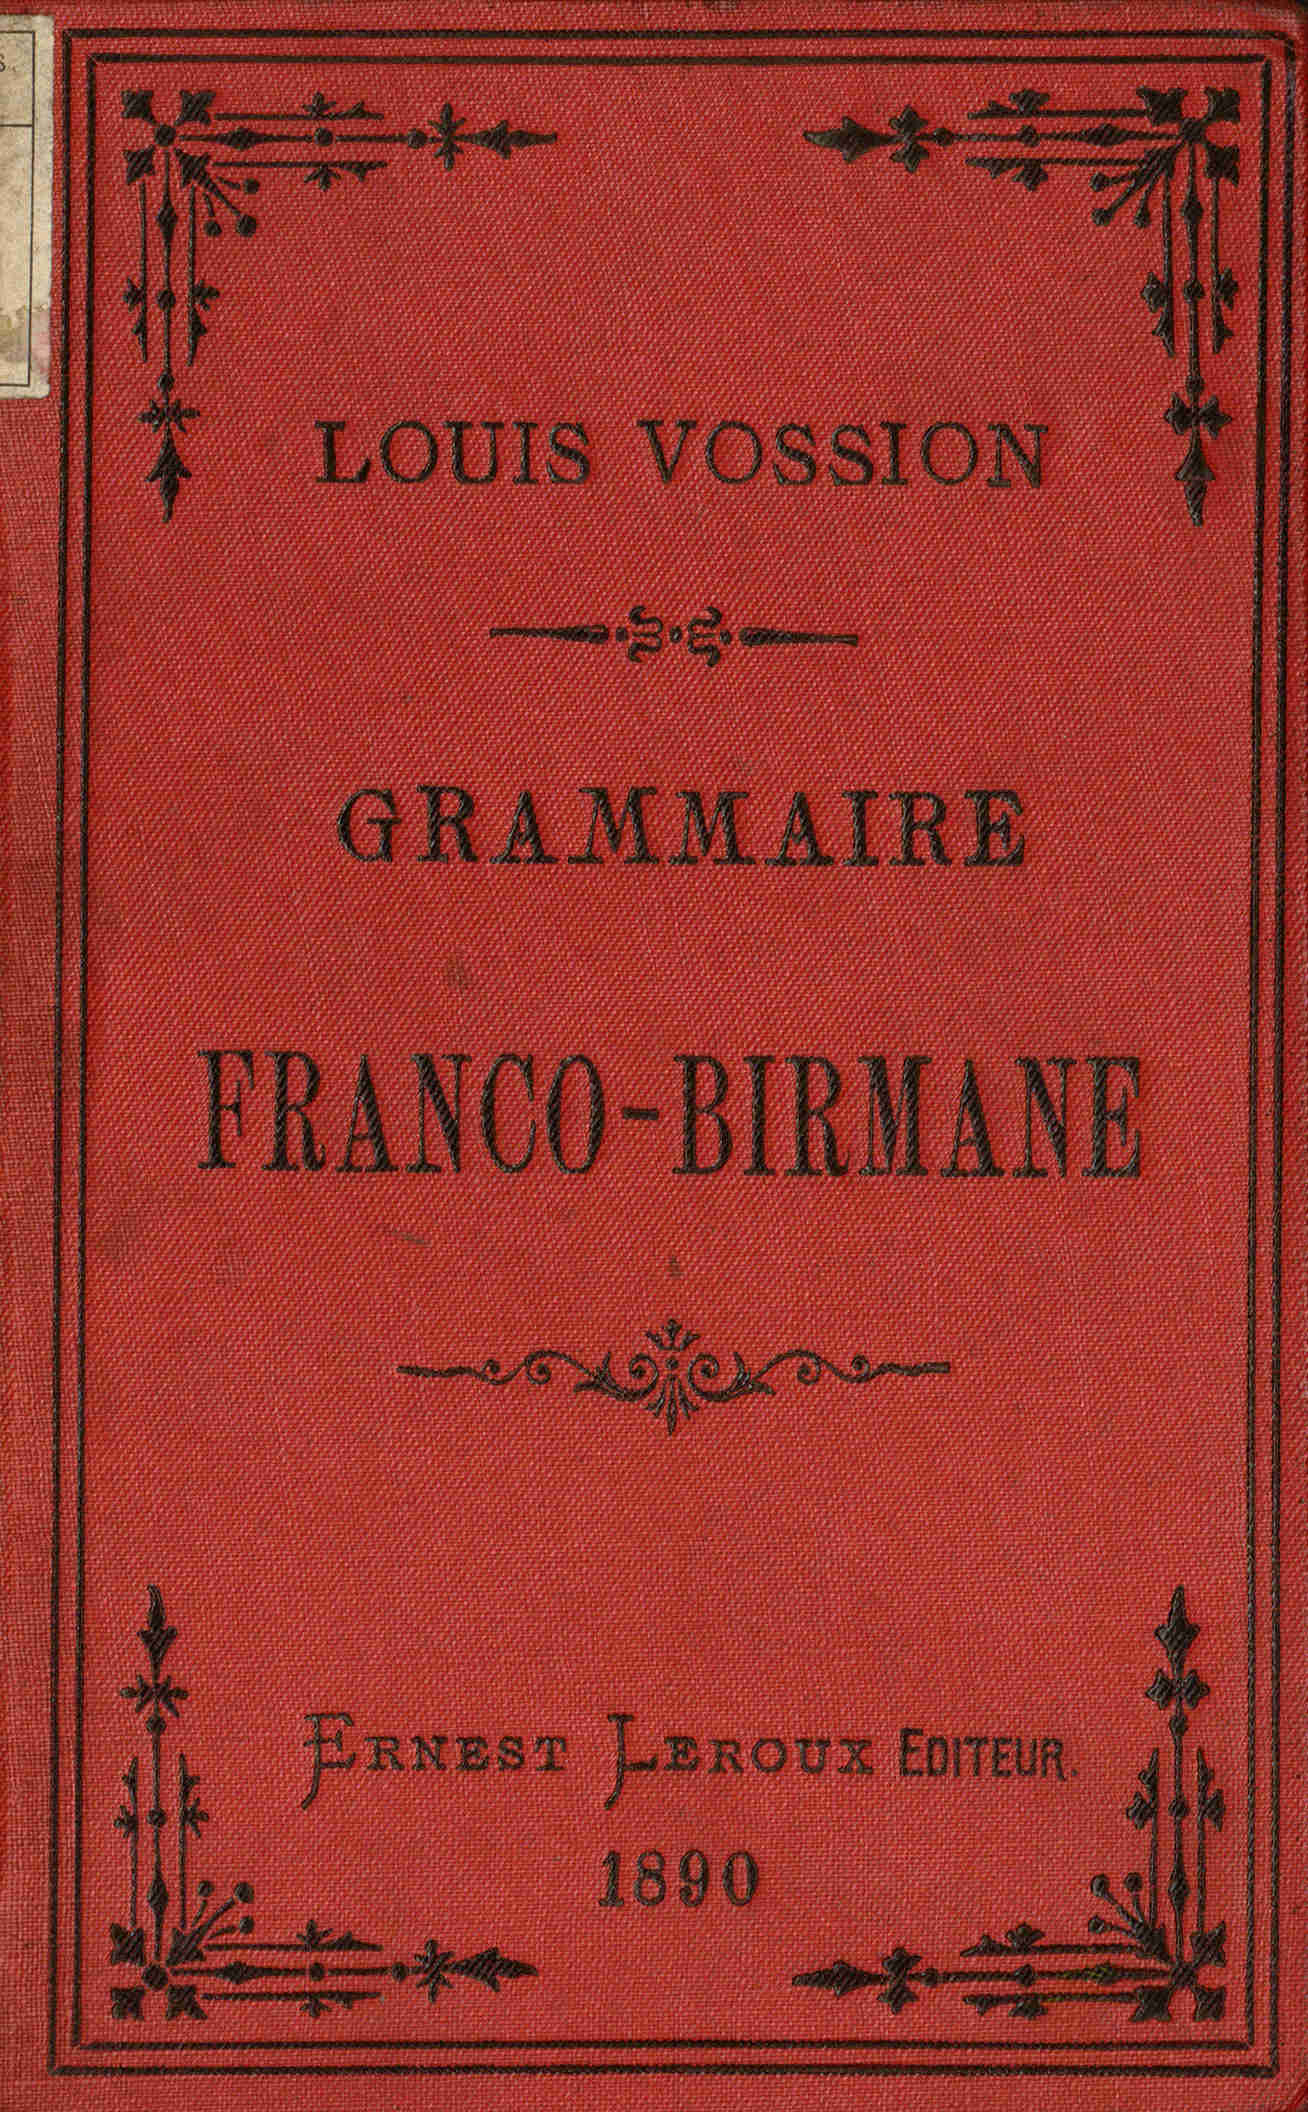 Grammaire franco-birmane